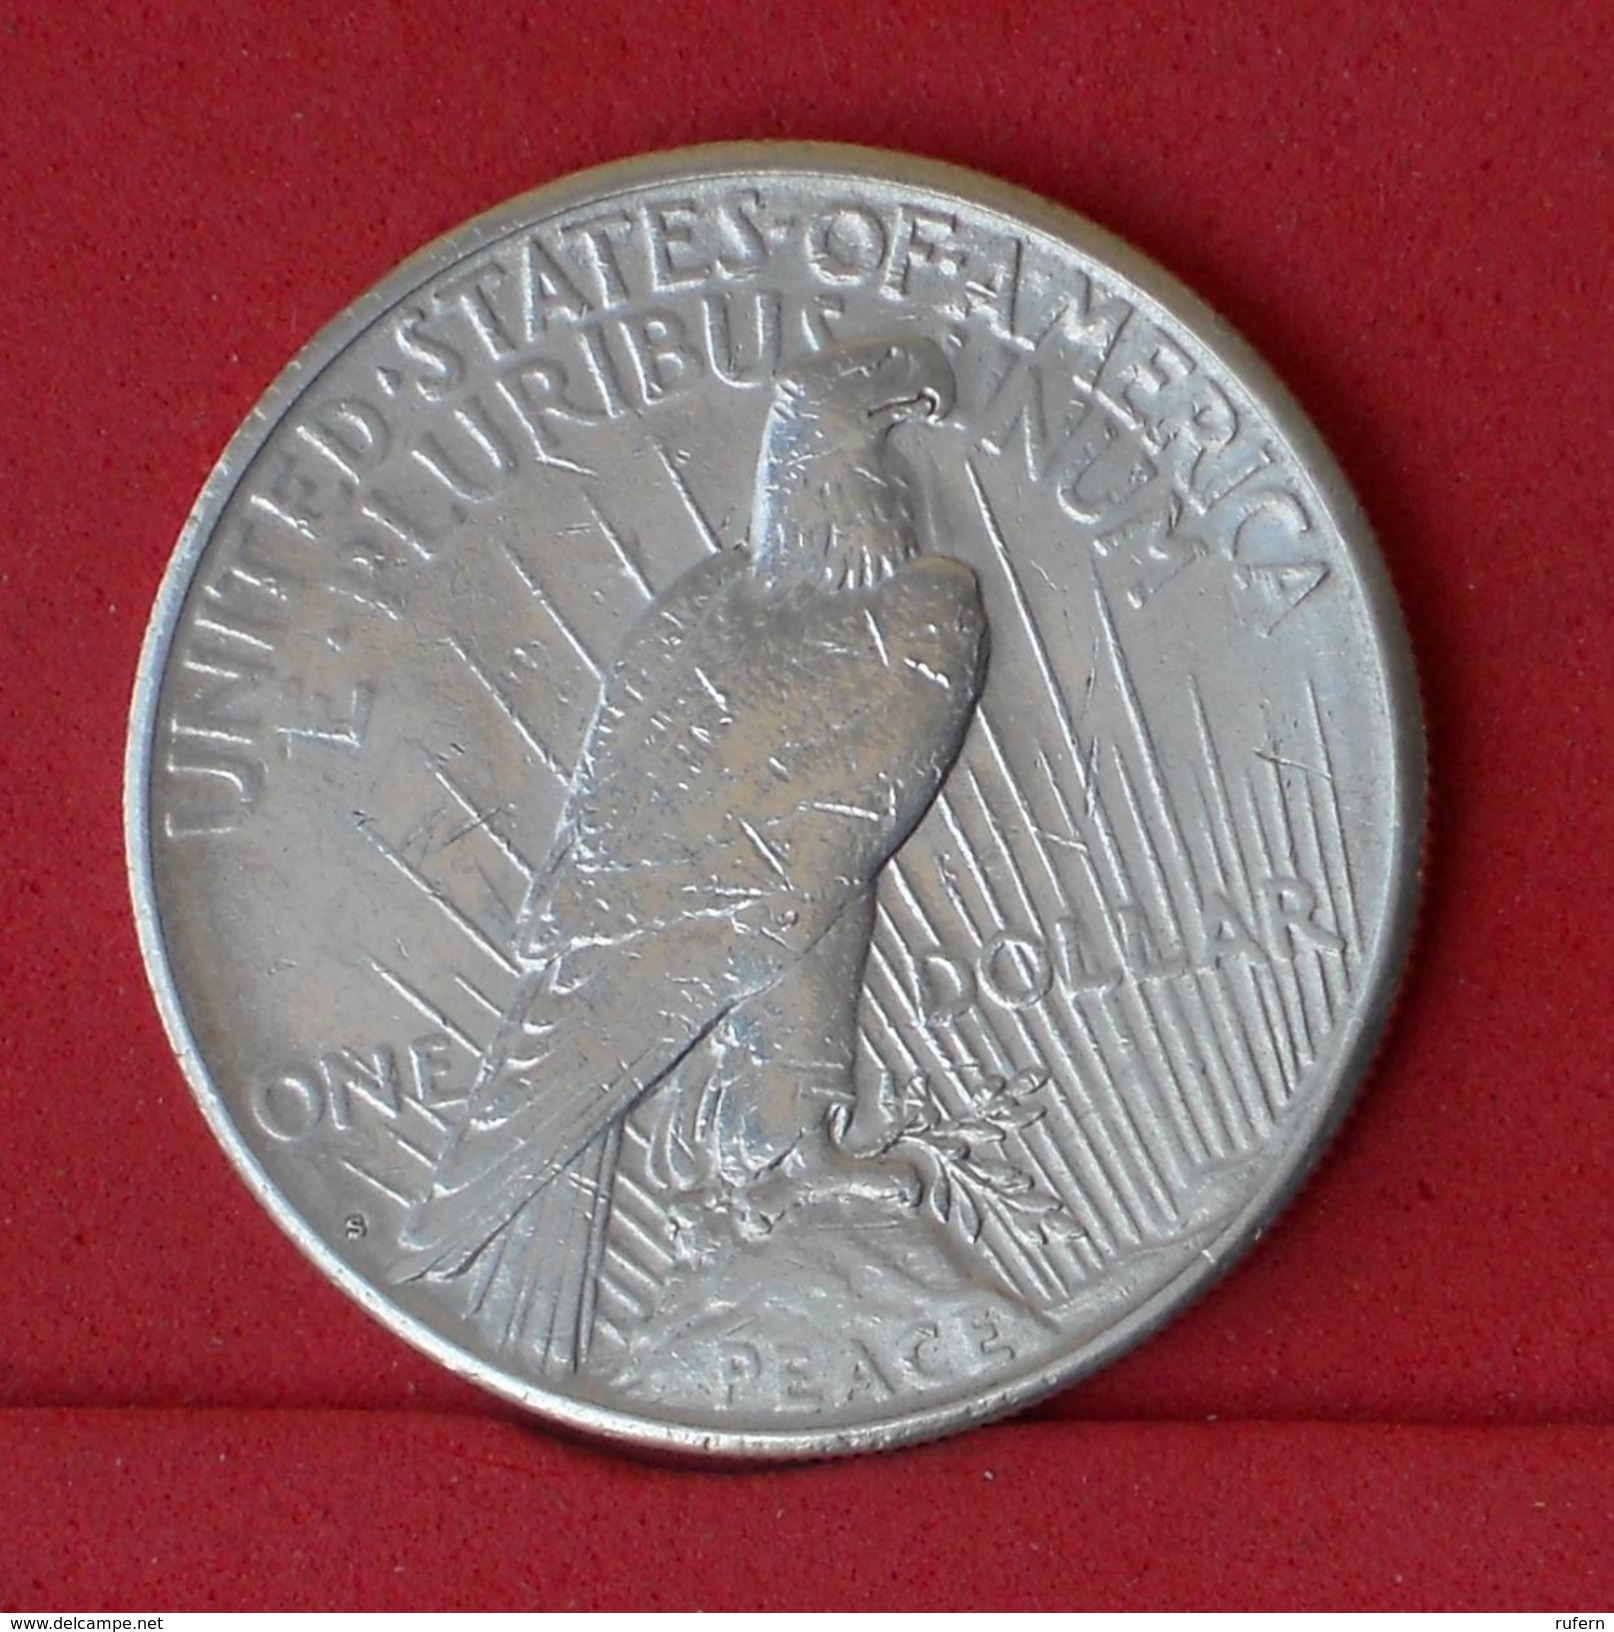 USA 1 DOLLAR 1923 S - 26,73 GRS 0,900 SILVER   KM# 150 - (Nº18264) - 1921-1935: Peace (Paix)